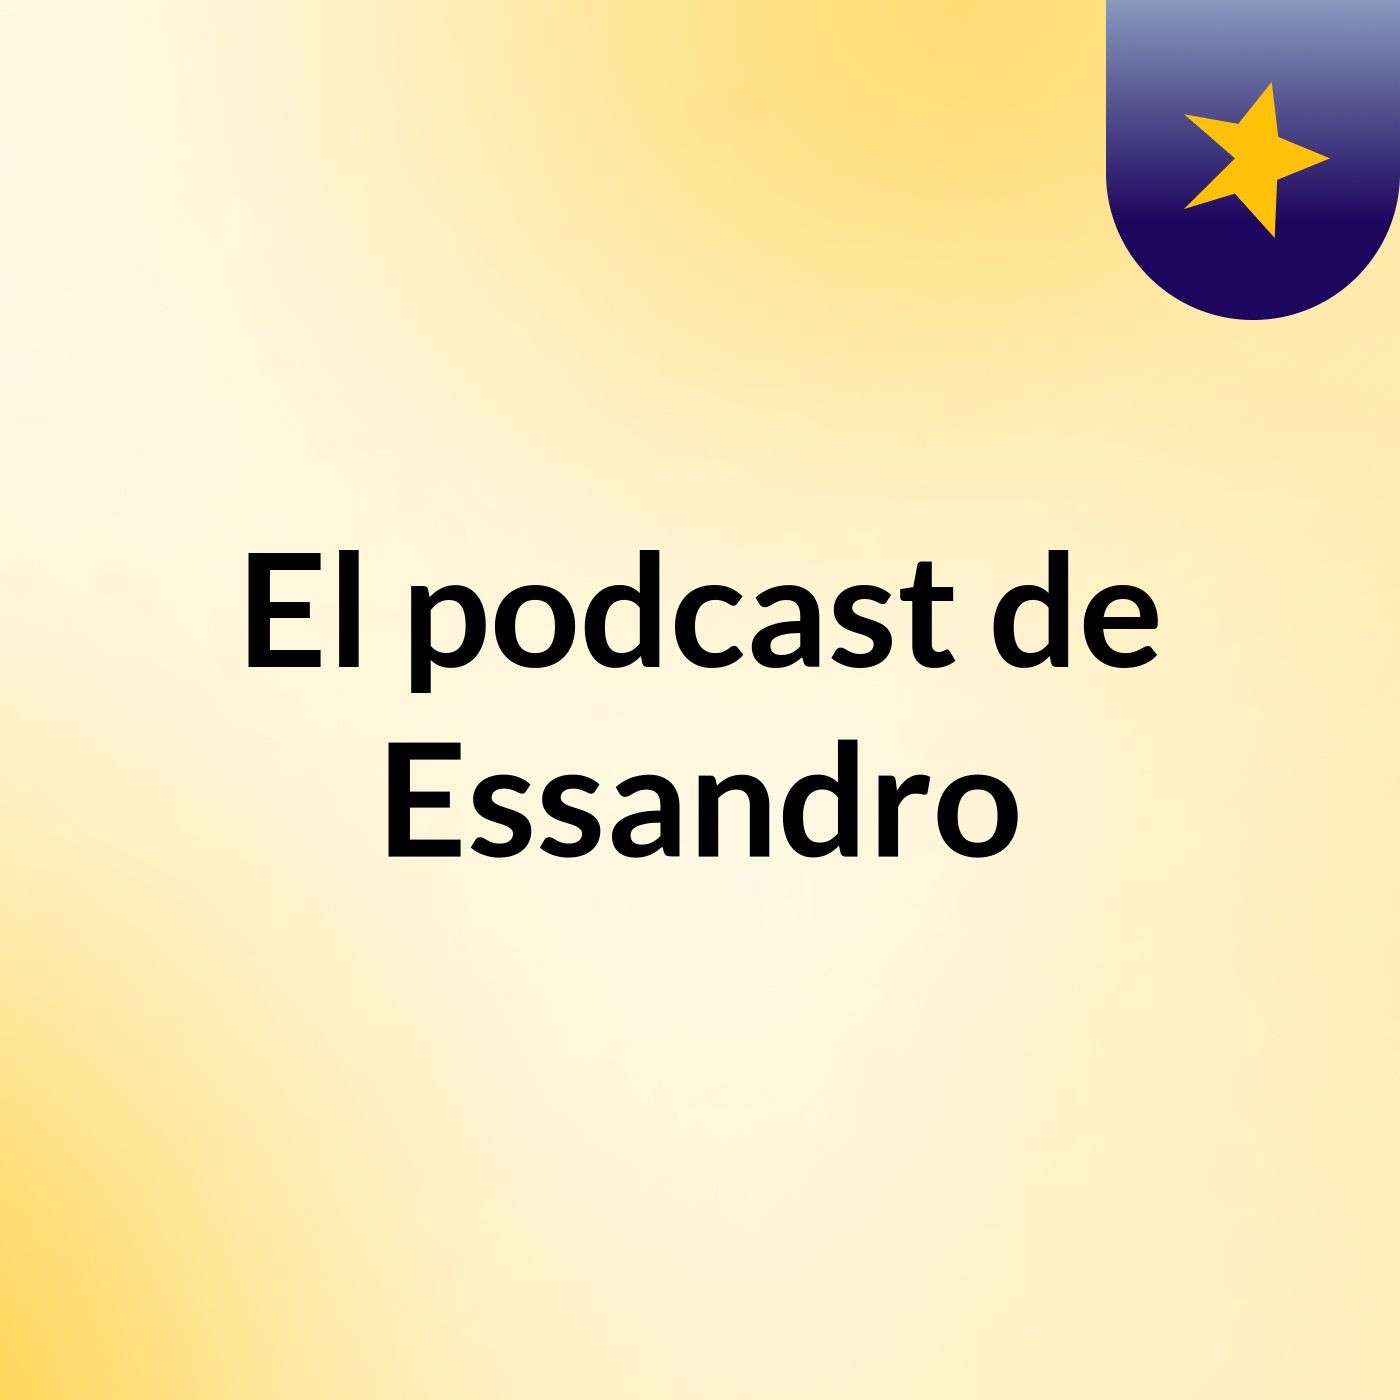 Episodio 12 - El podcast de Essandro